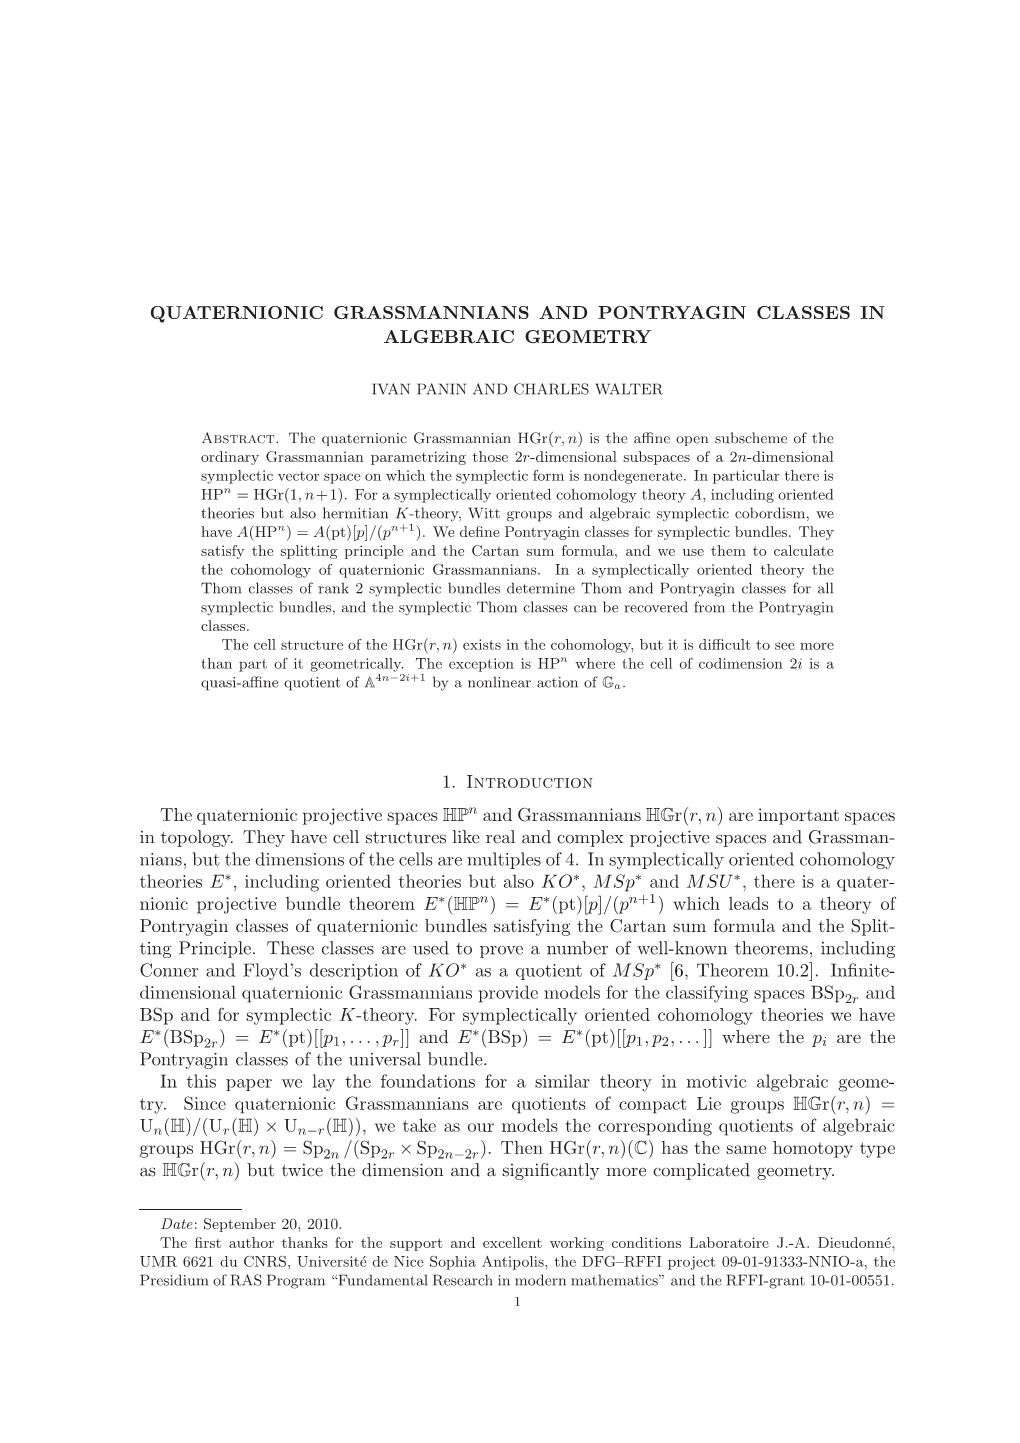 Quaternionic Grassmannians and Pontryagin Classes in Algebraic Geometry